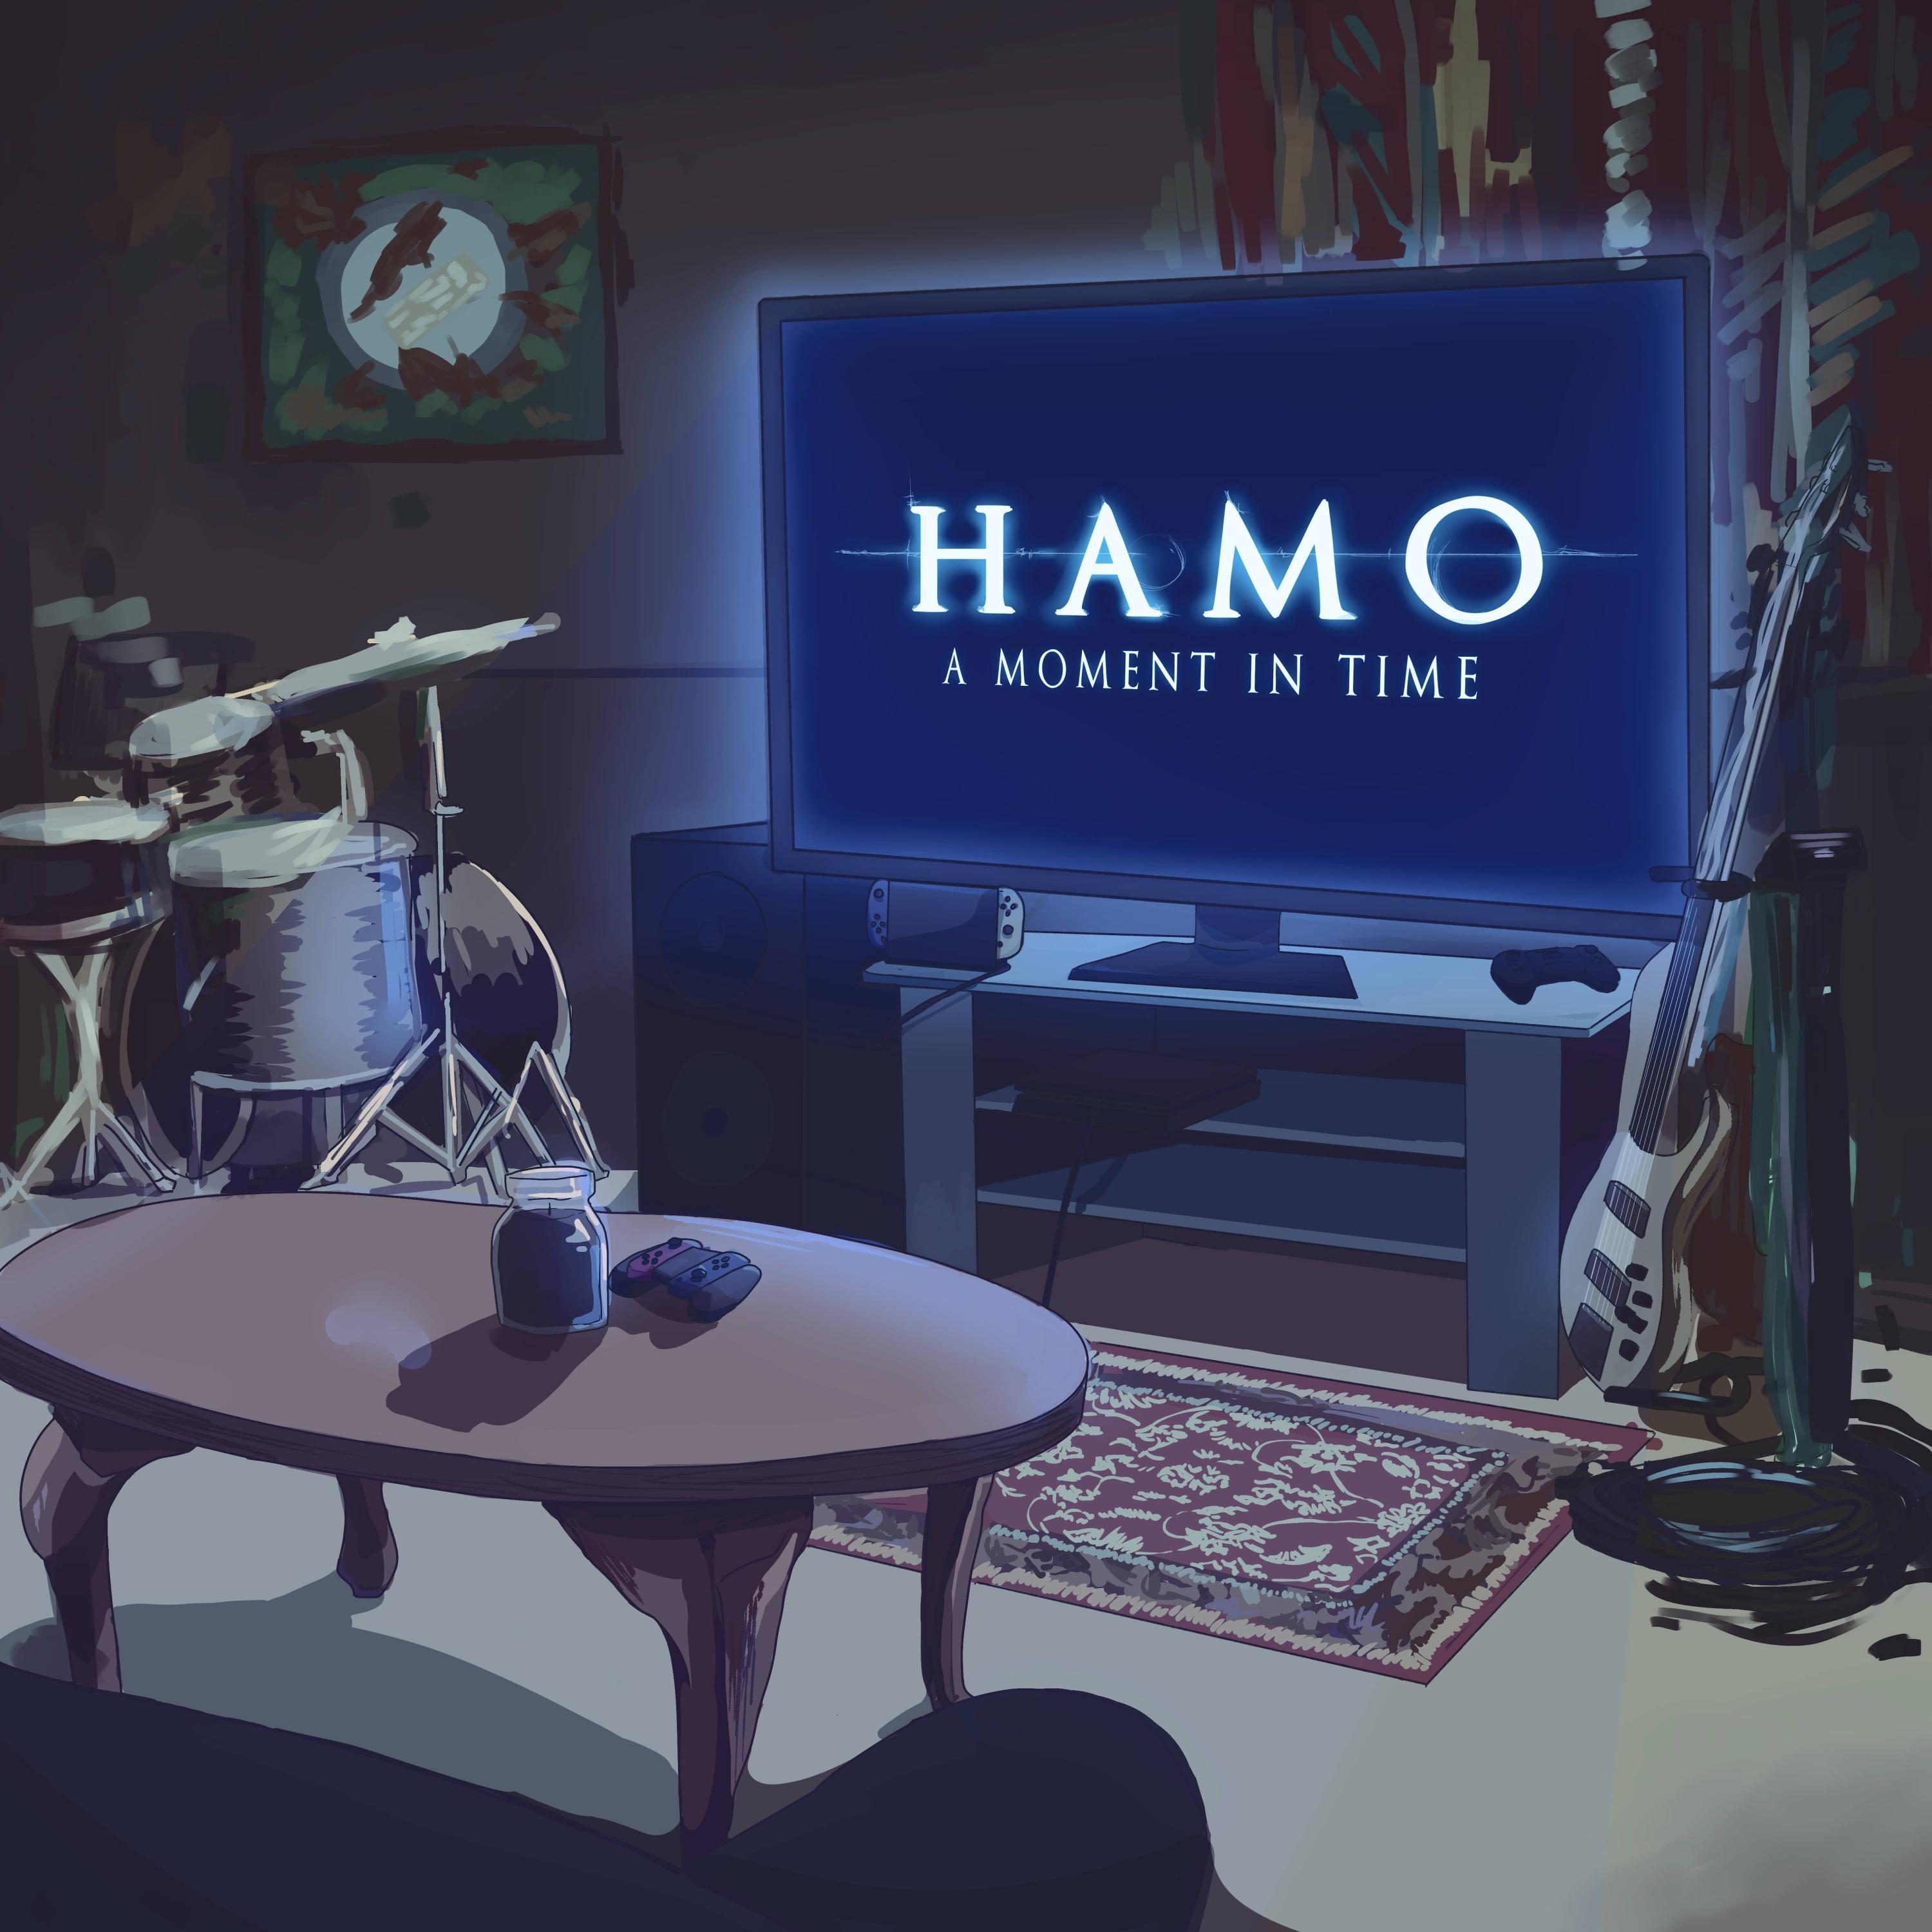 Hamo - Leading Us To Chaos